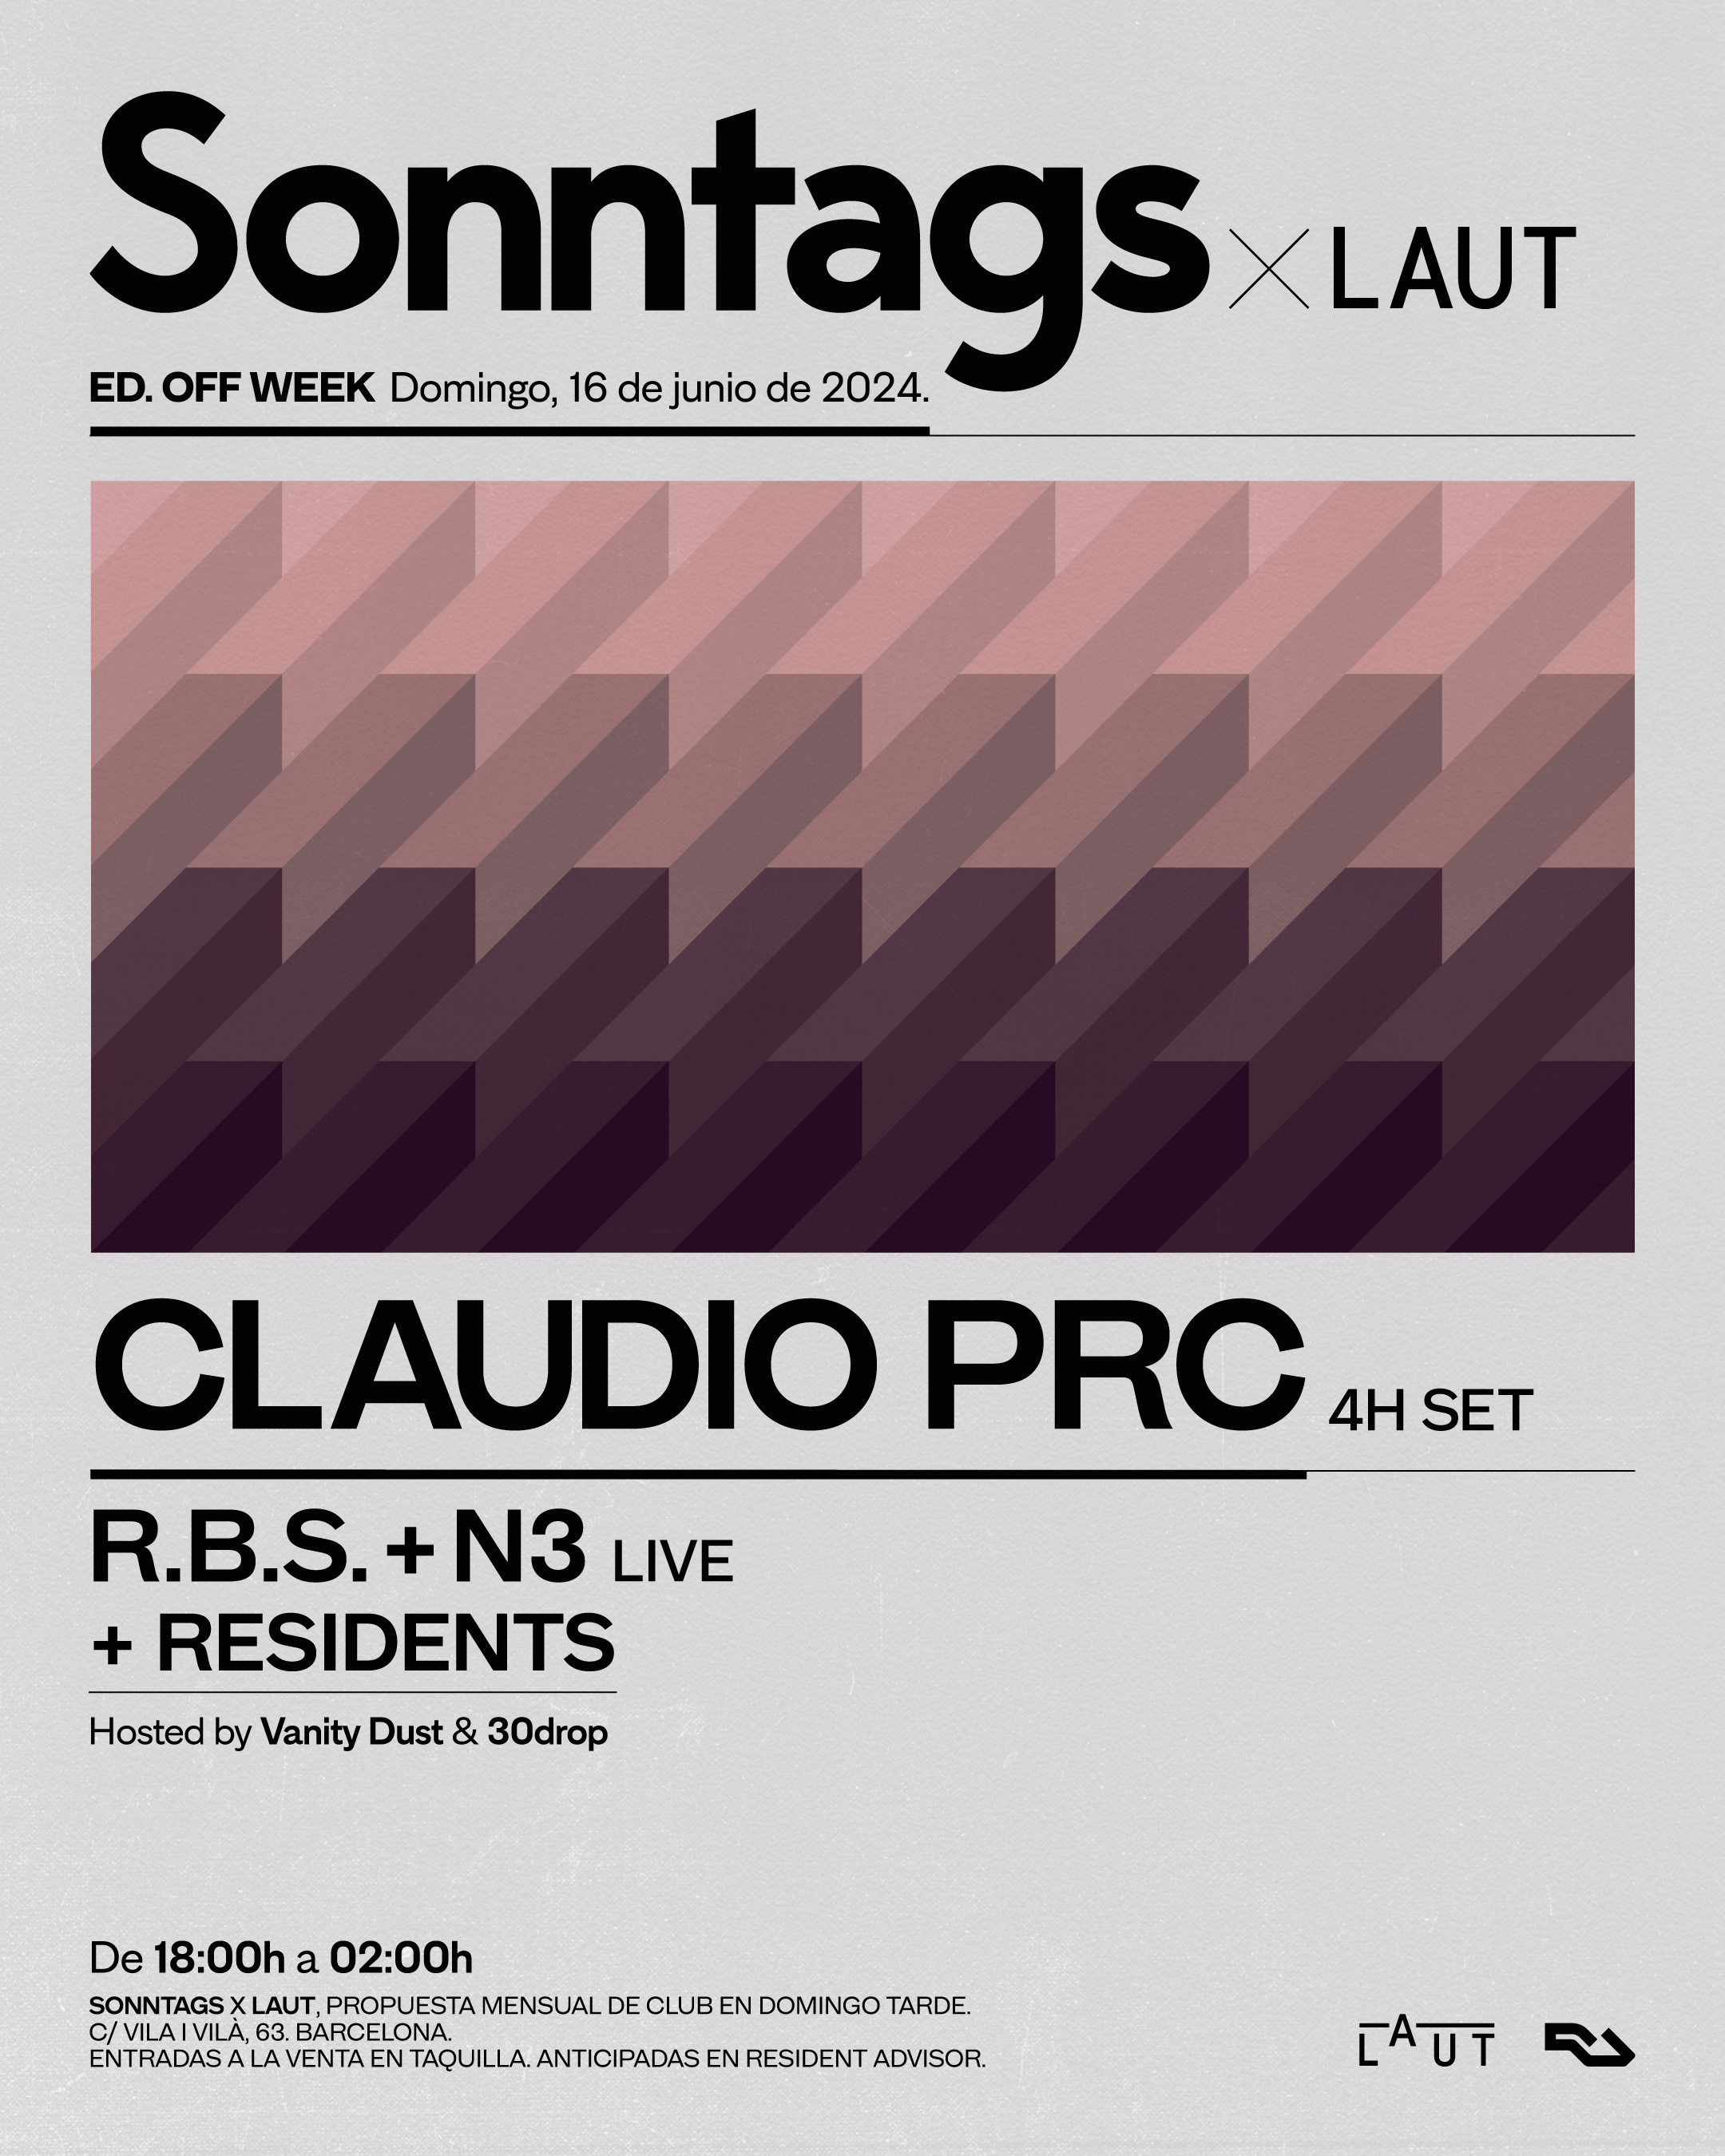 Sonntags x LAUT: Claudio PRC (4h set) + R.B.S.+N3 (live) + 30drop + Vanity Dust - フライヤー表